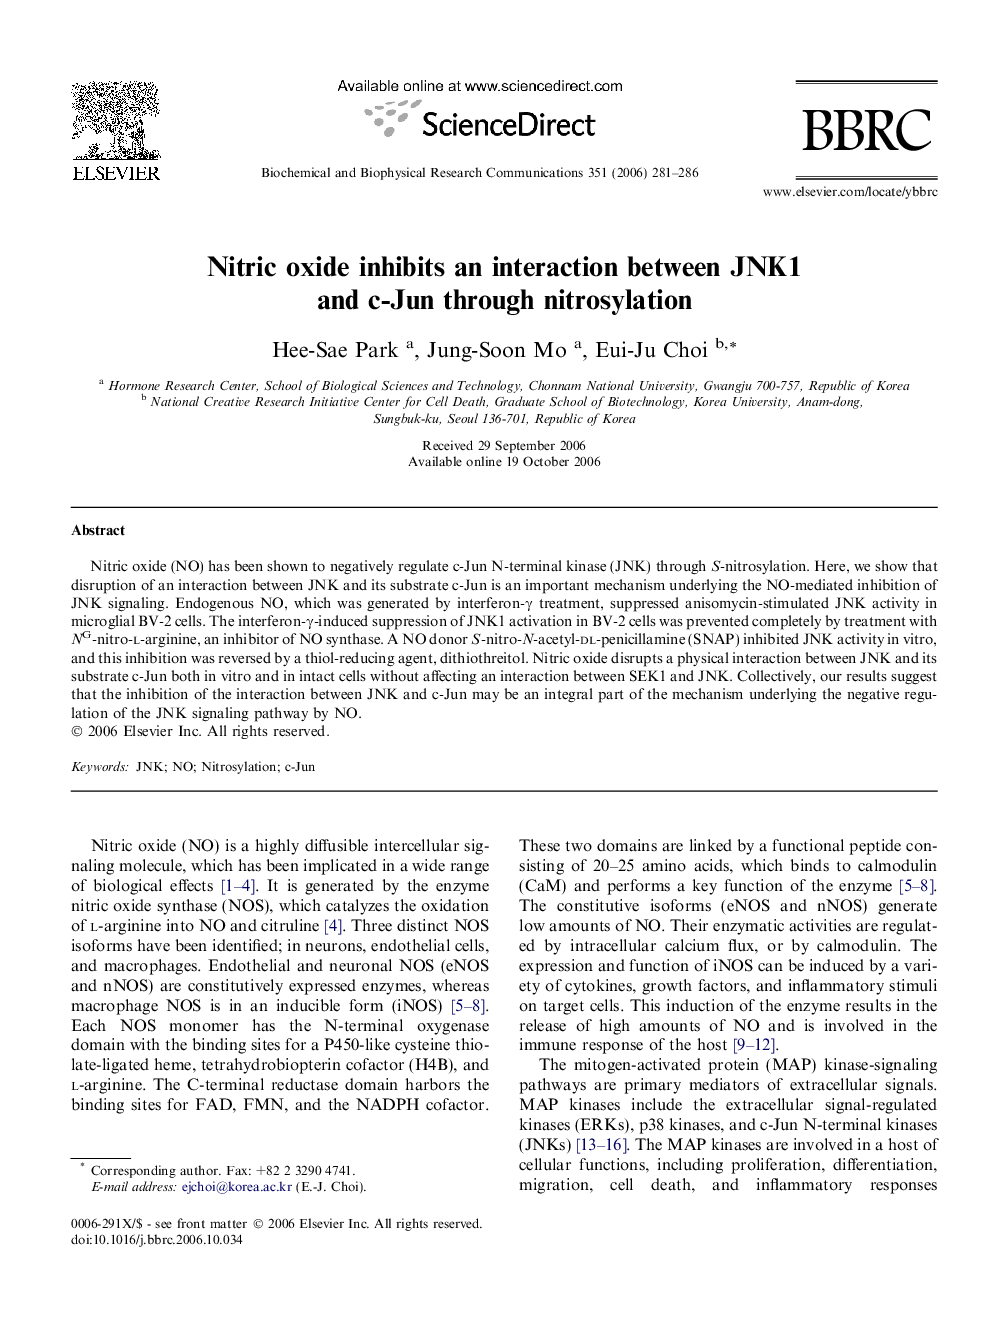 Nitric oxide inhibits an interaction between JNK1 and c-Jun through nitrosylation